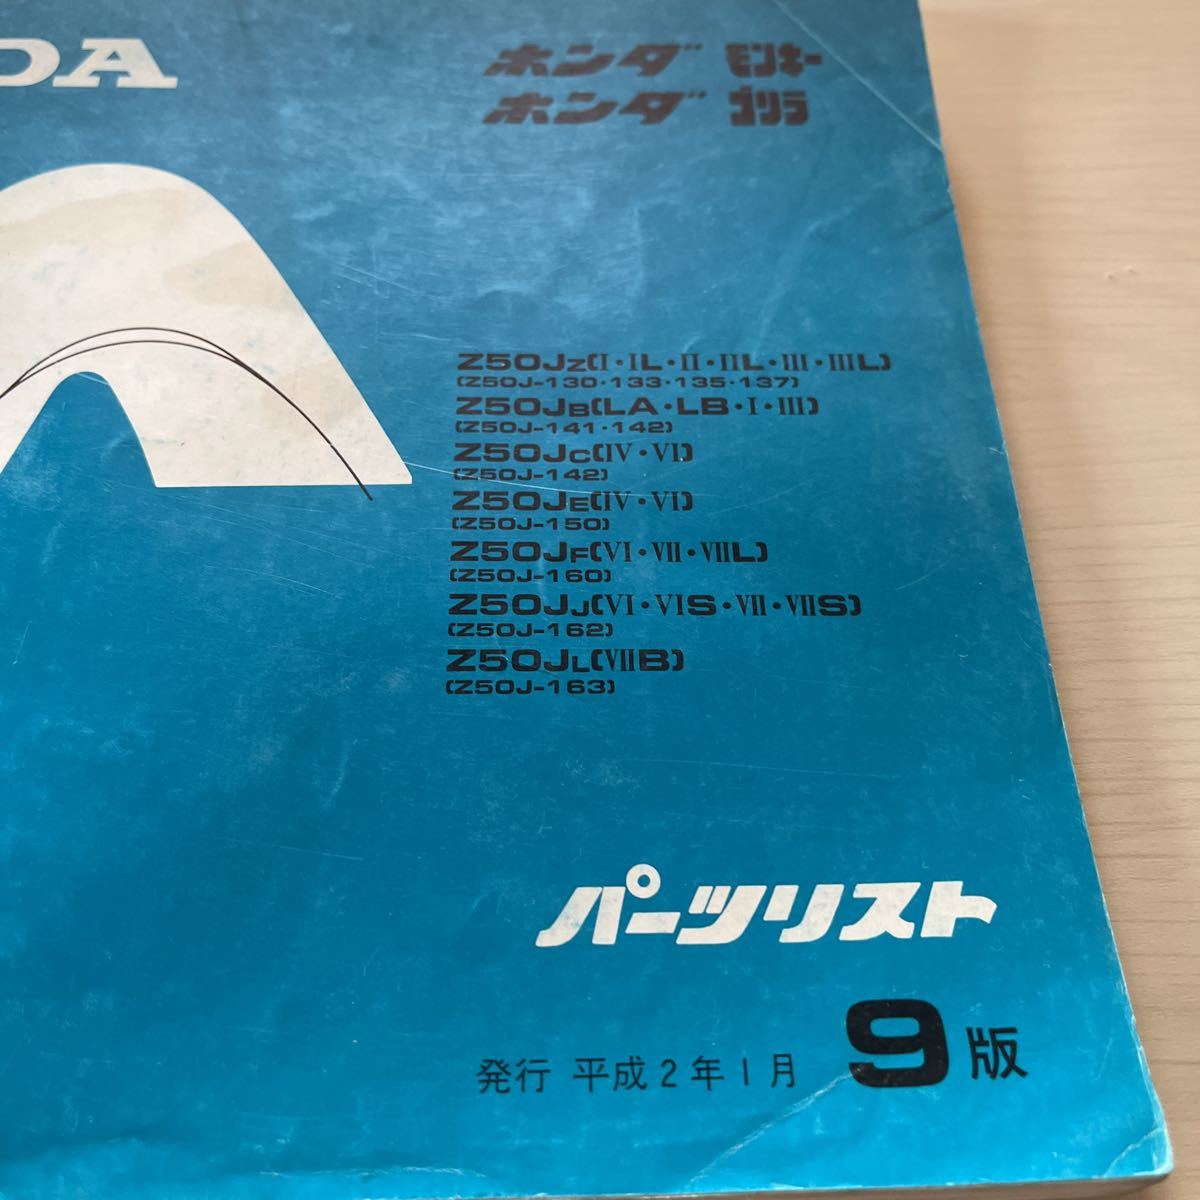 HONDA 正規品 パーツカタログ リスト モンキー ゴリラ 9版 Z50Jz〜旧車 